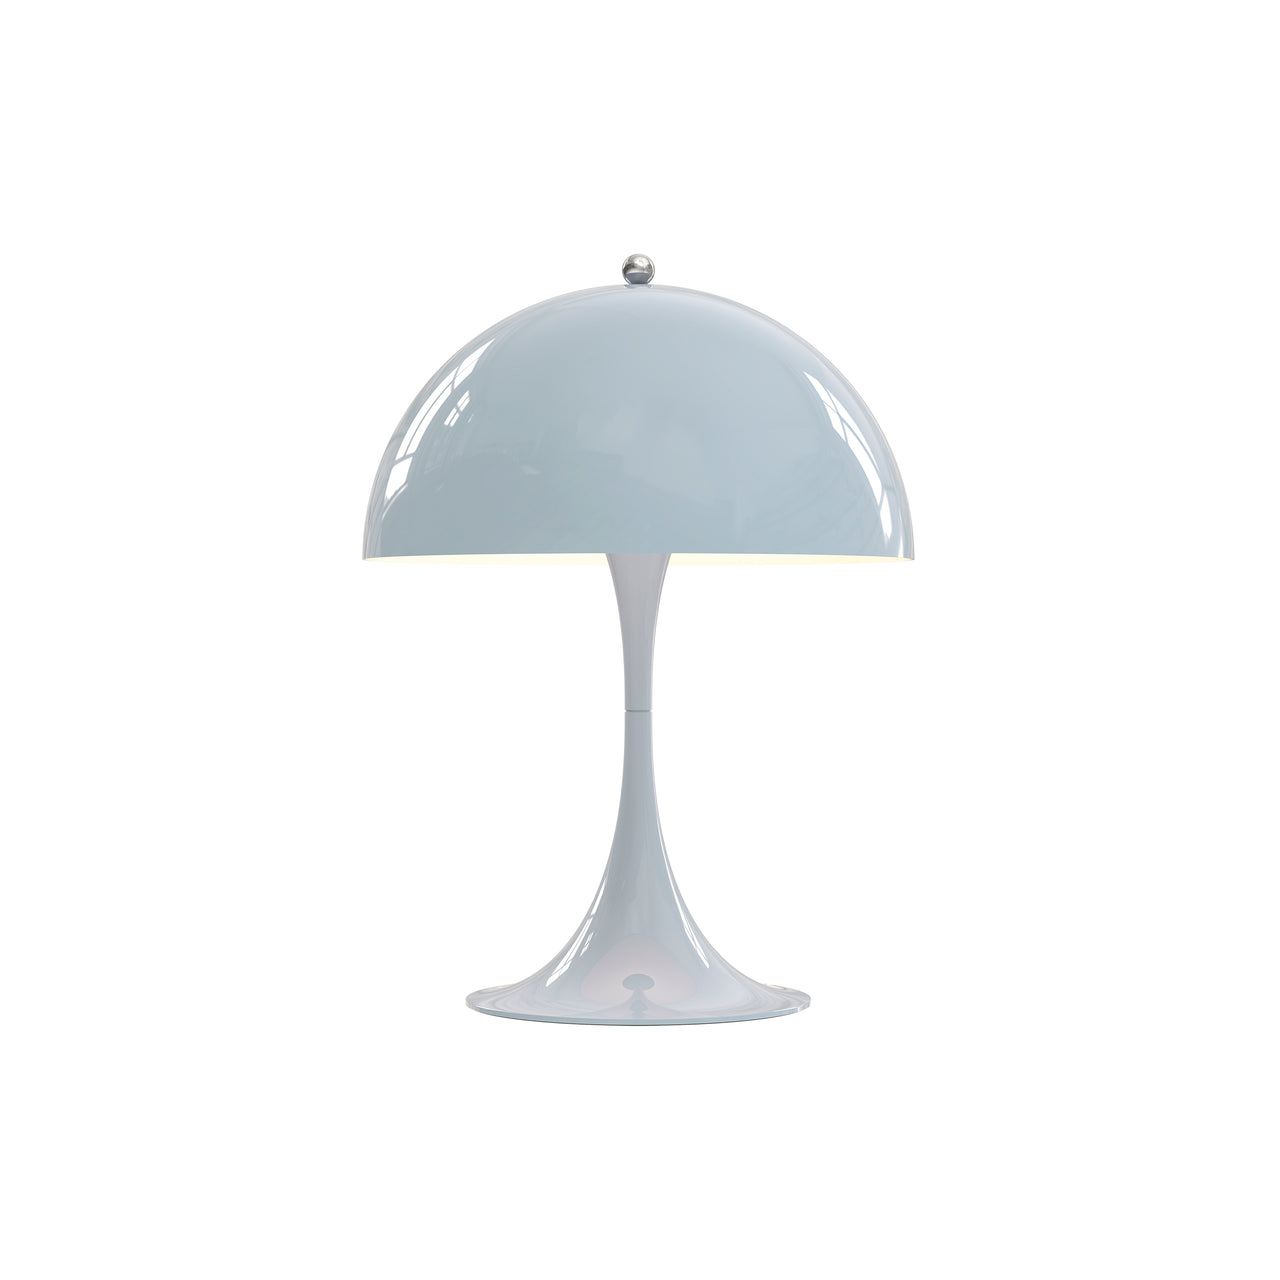 Panthella 250 Table Lamp: Pale Blue